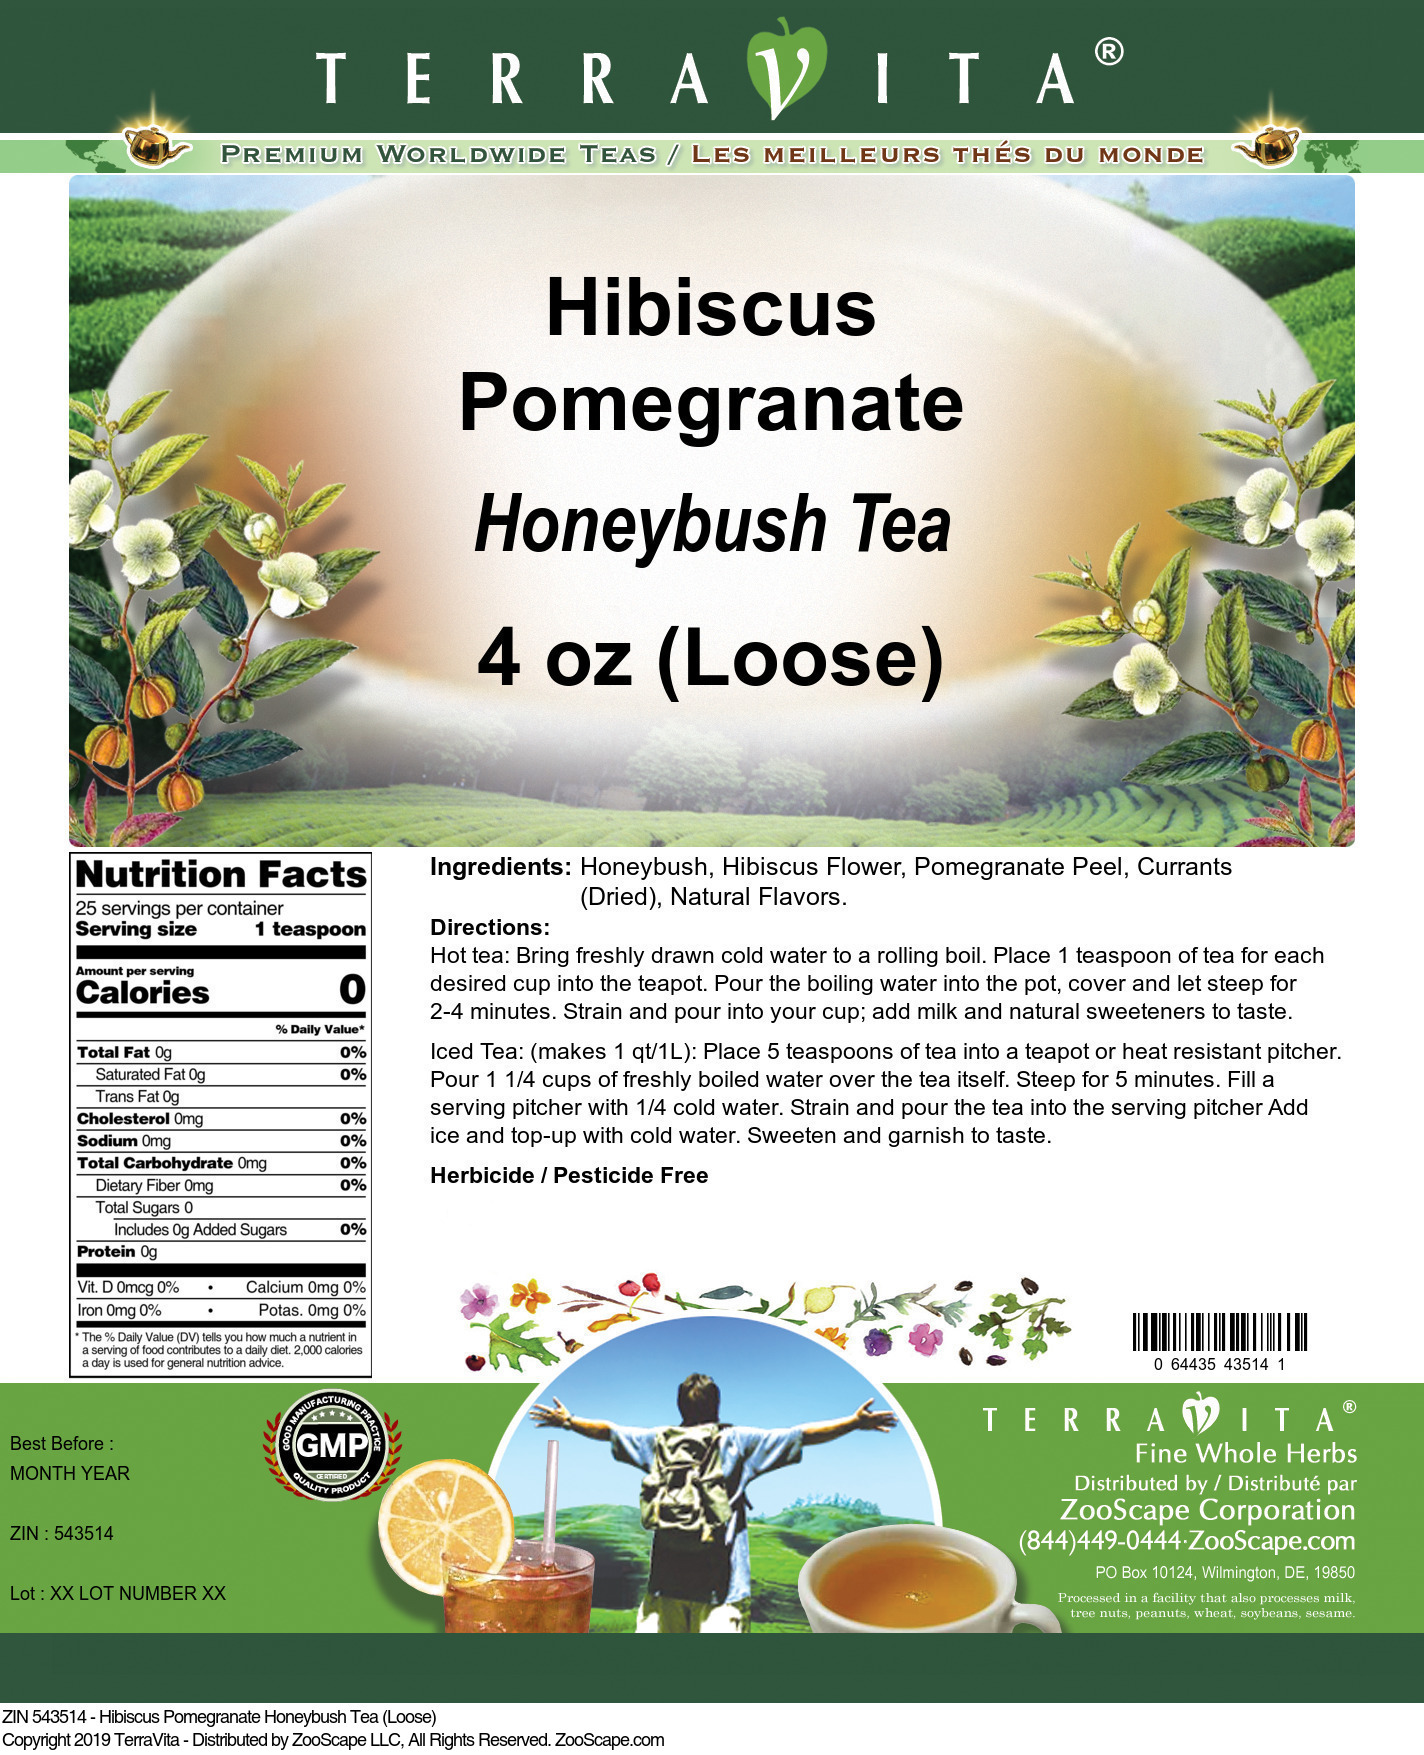 Hibiscus Pomegranate Honeybush Tea (Loose) - Label